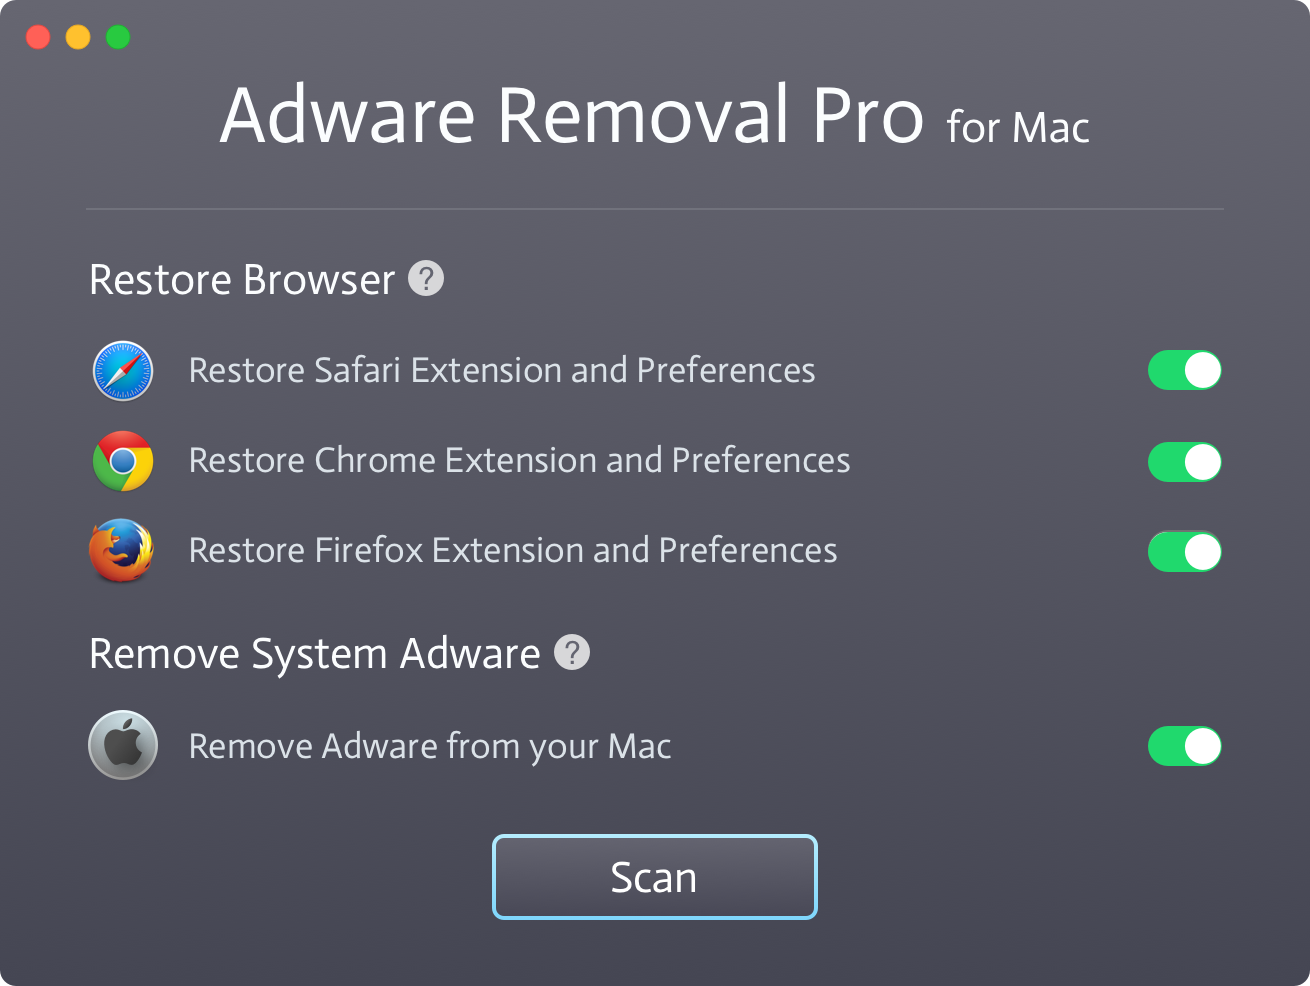 Adware cleaner mac 10.6.8